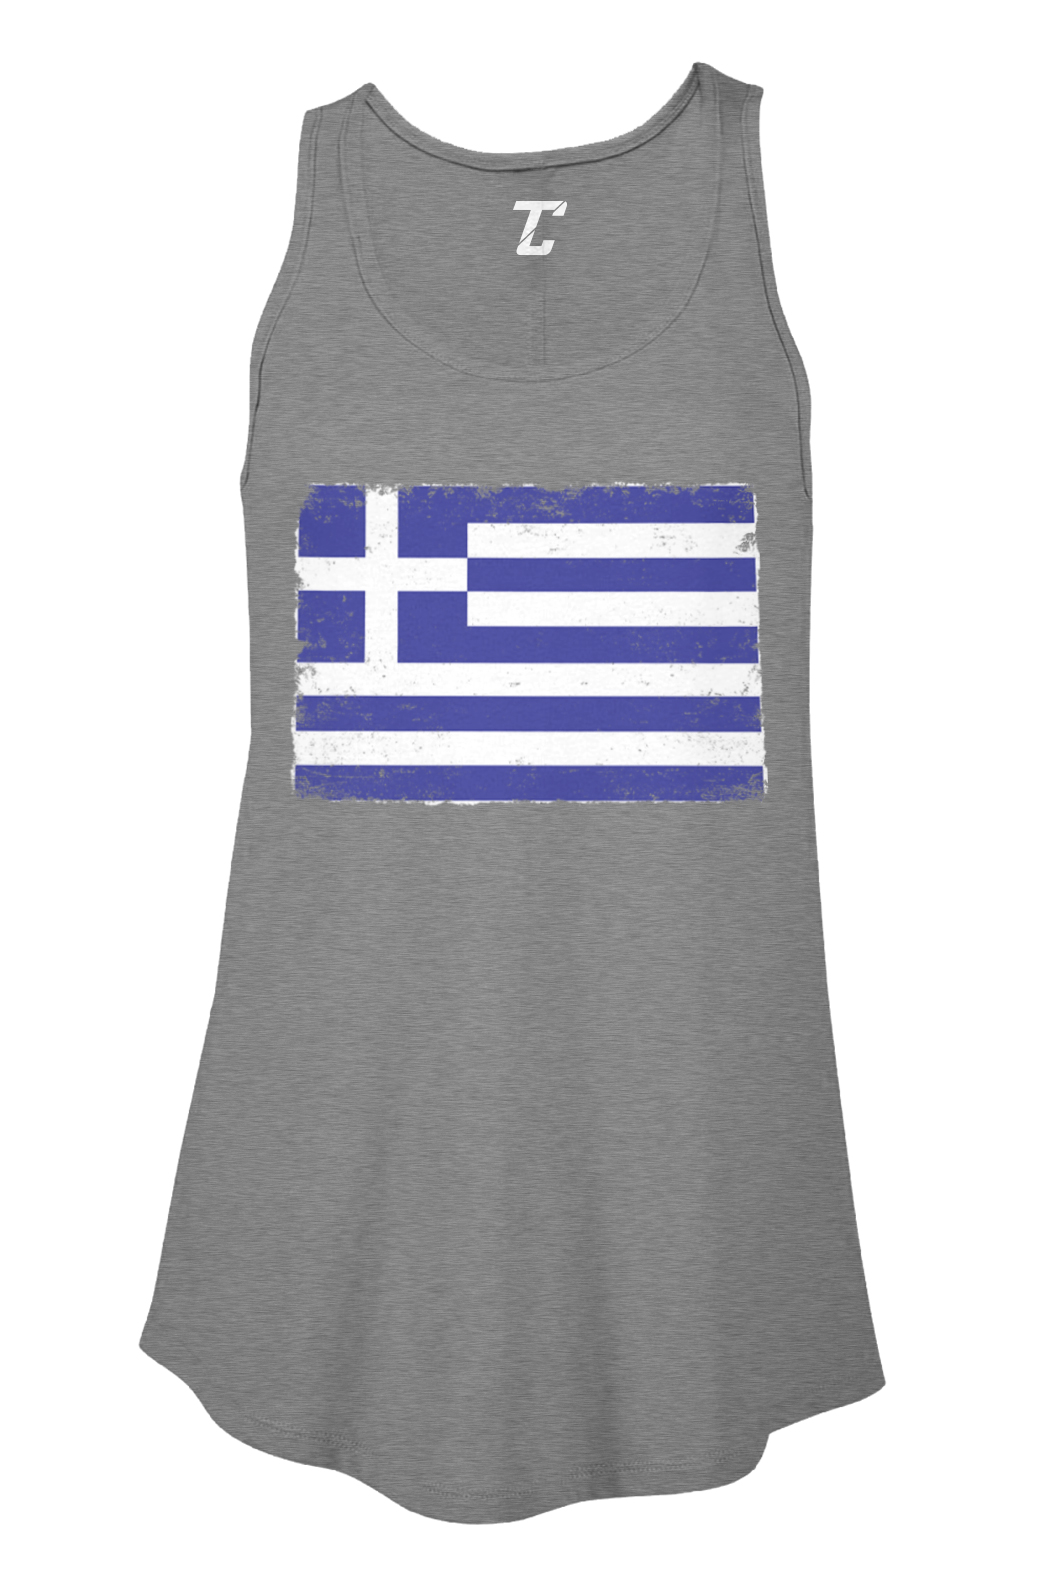 Threadrock Women's Greece Flag Racerback Tank Top Athens Greek Europe Pride 